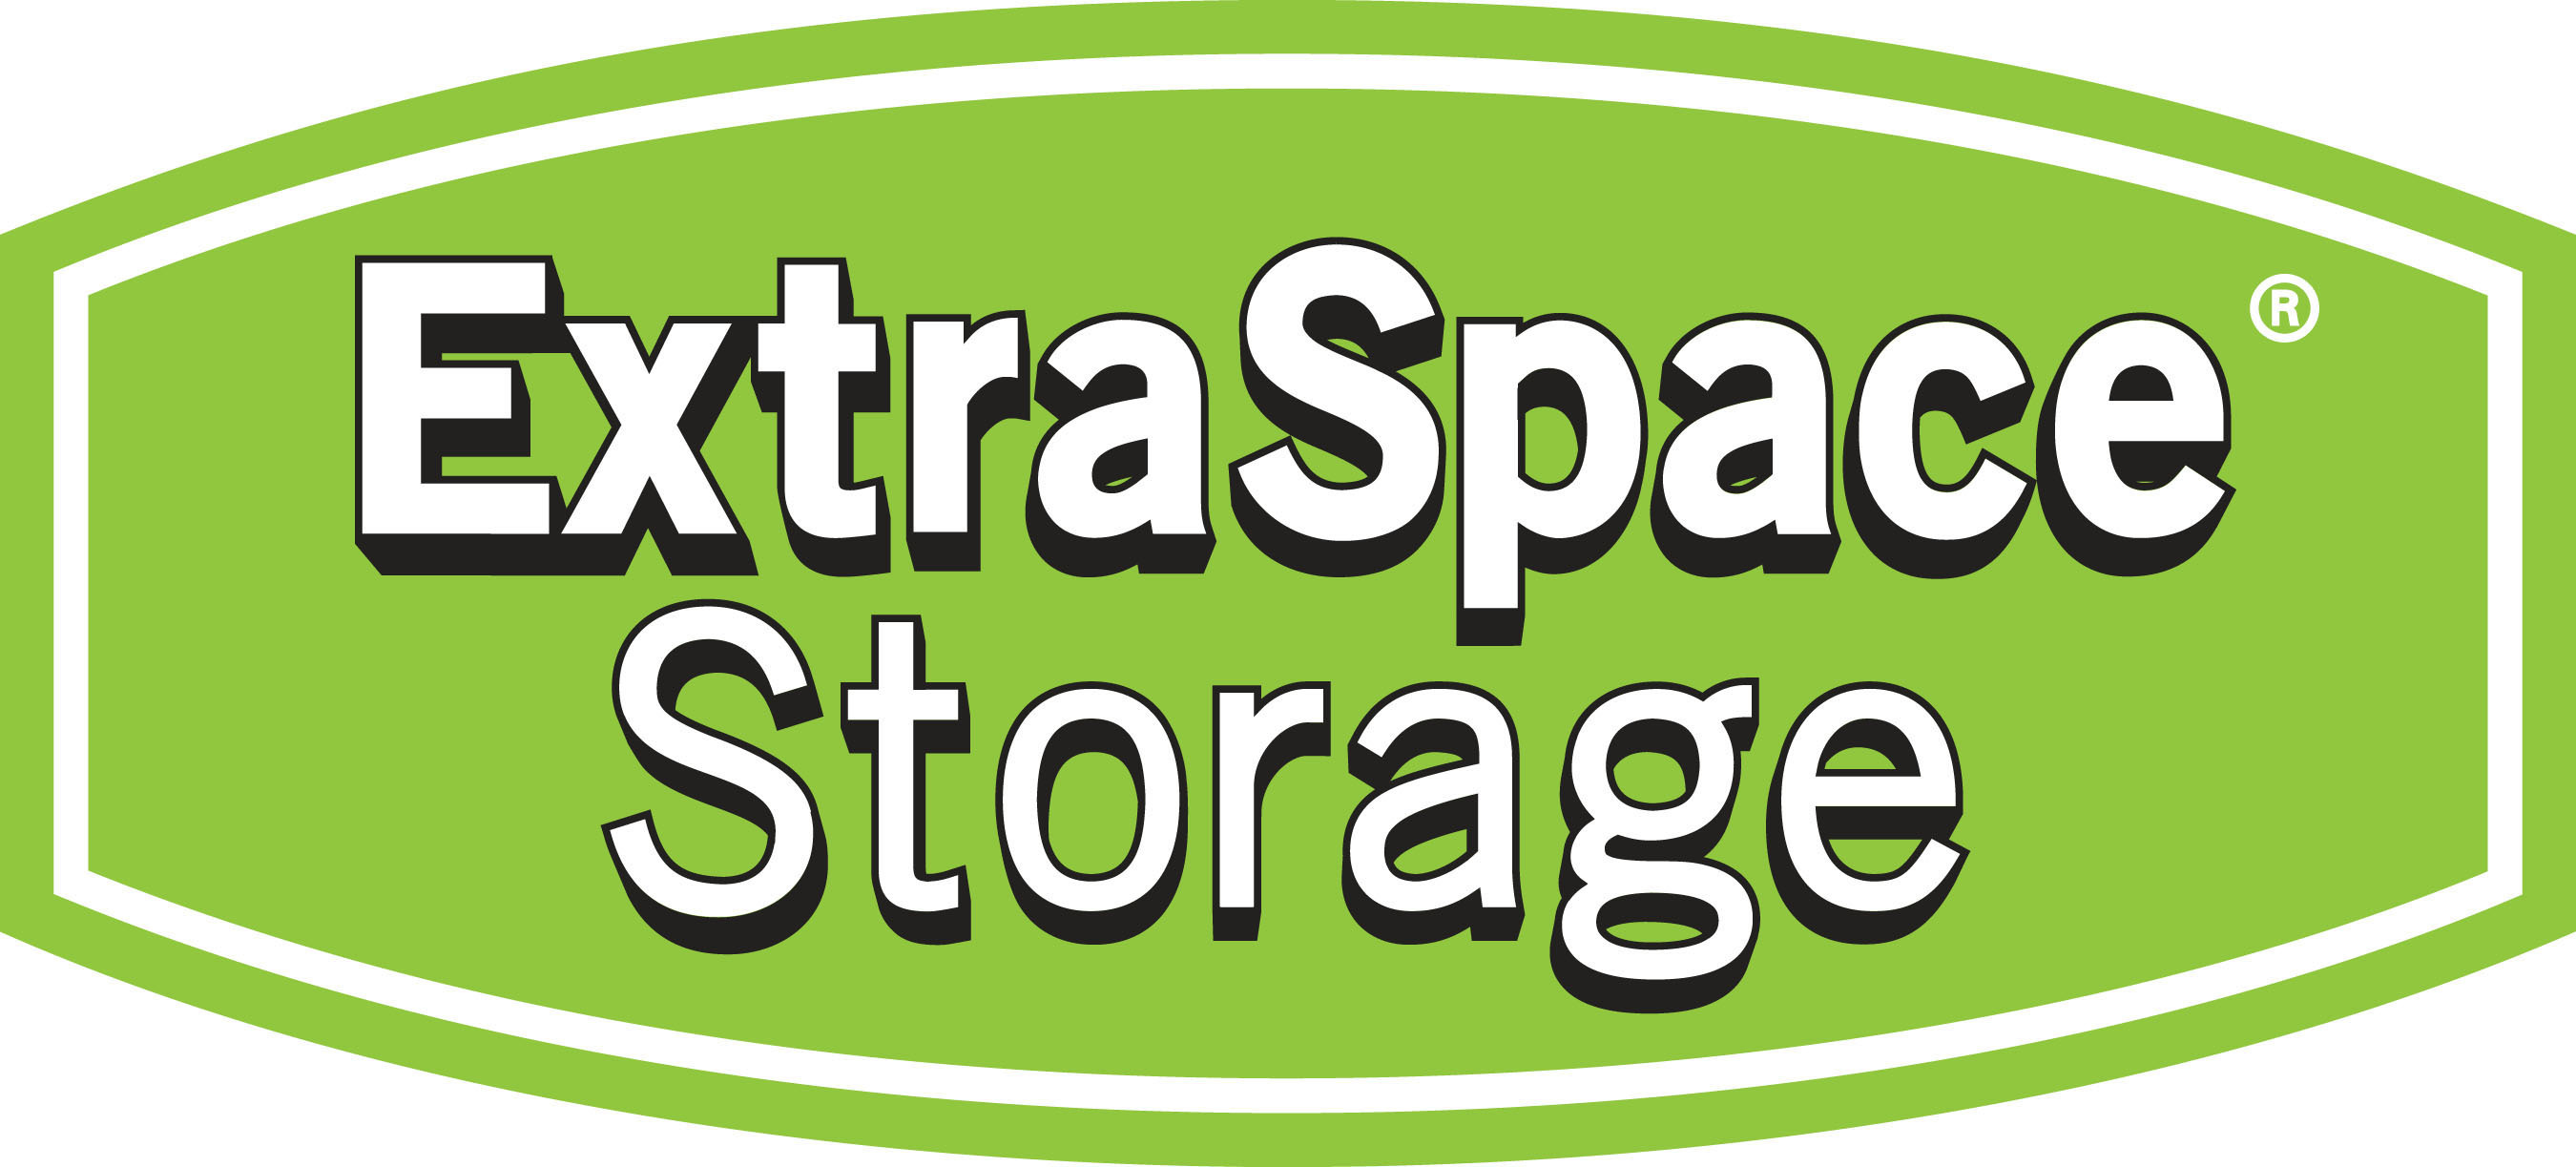 Extra Space Storage.